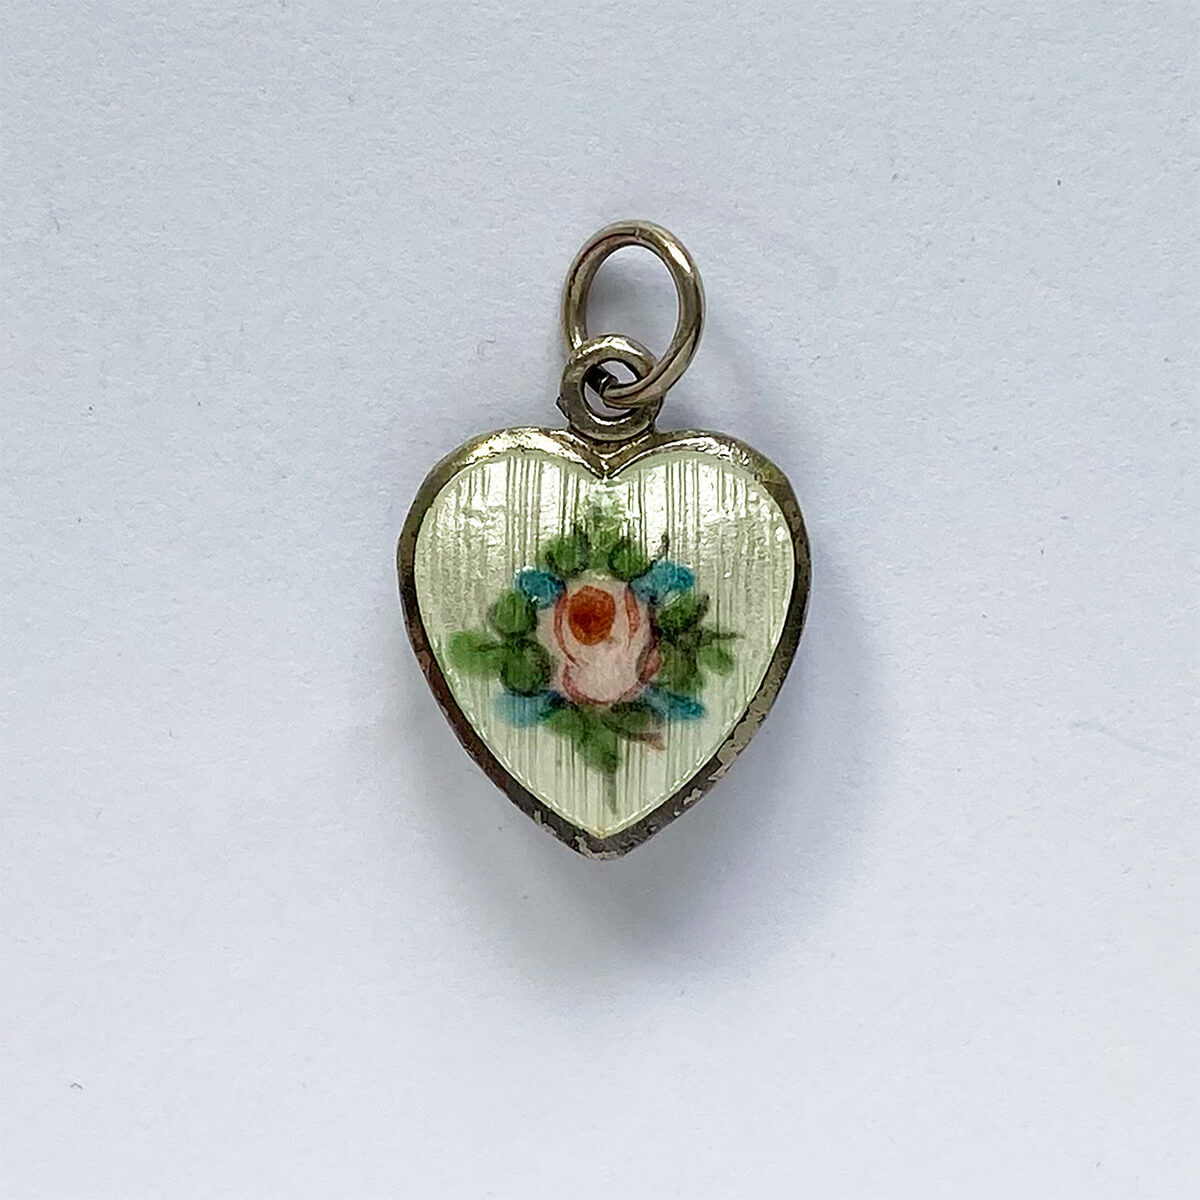 Love heart charm guilloche enamel pink rose blue flowers sterling silver pendant from Charmarama